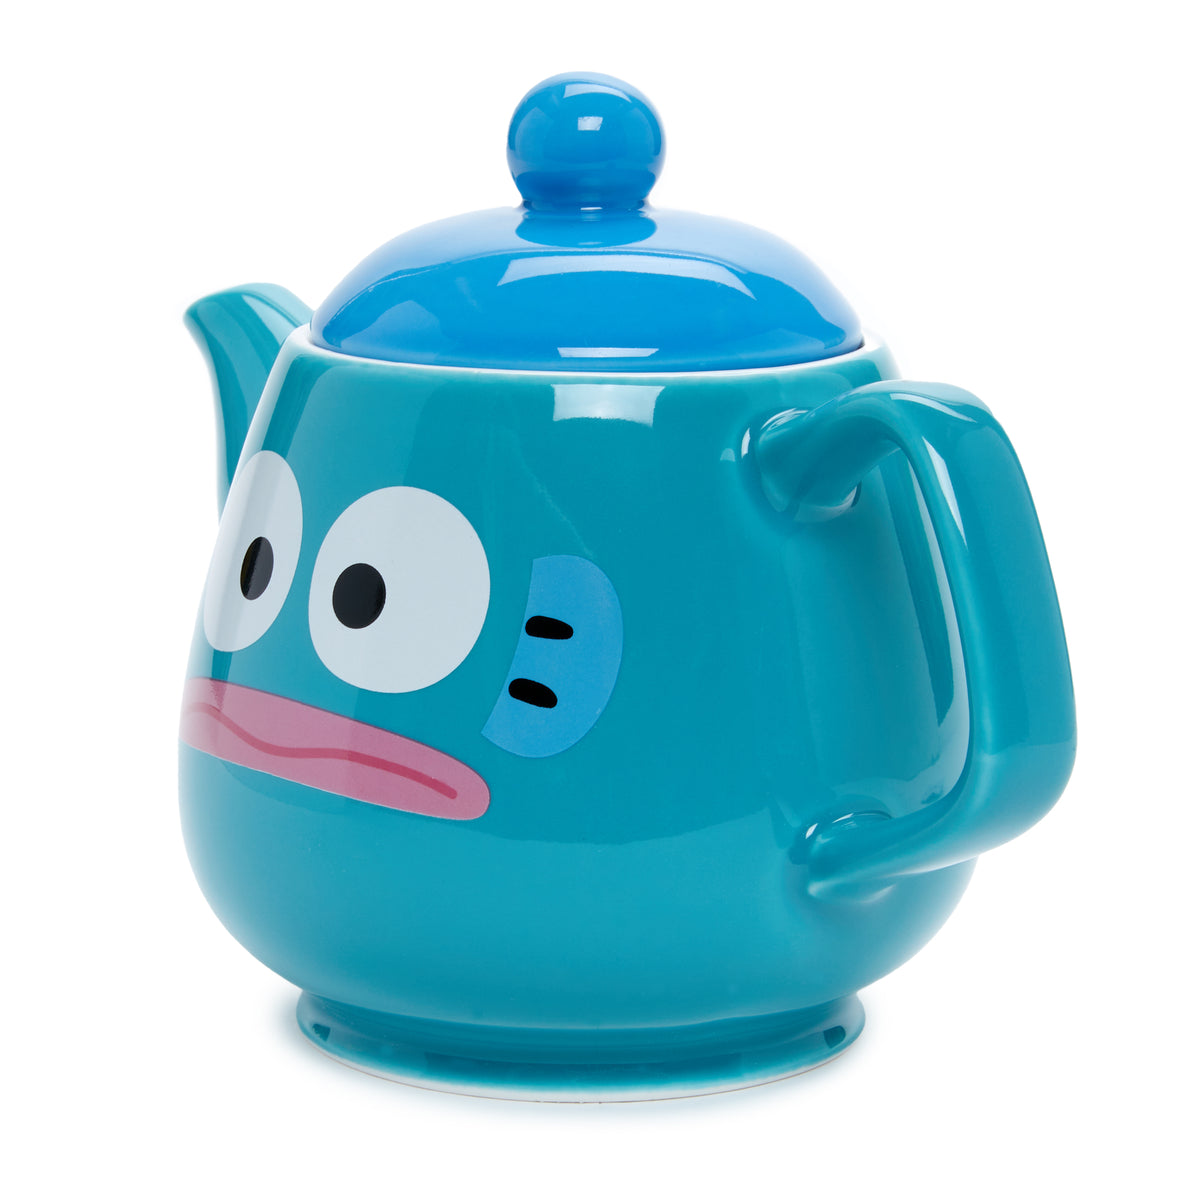 Hangyodon Ceramic Teapot Home Goods Global Original   